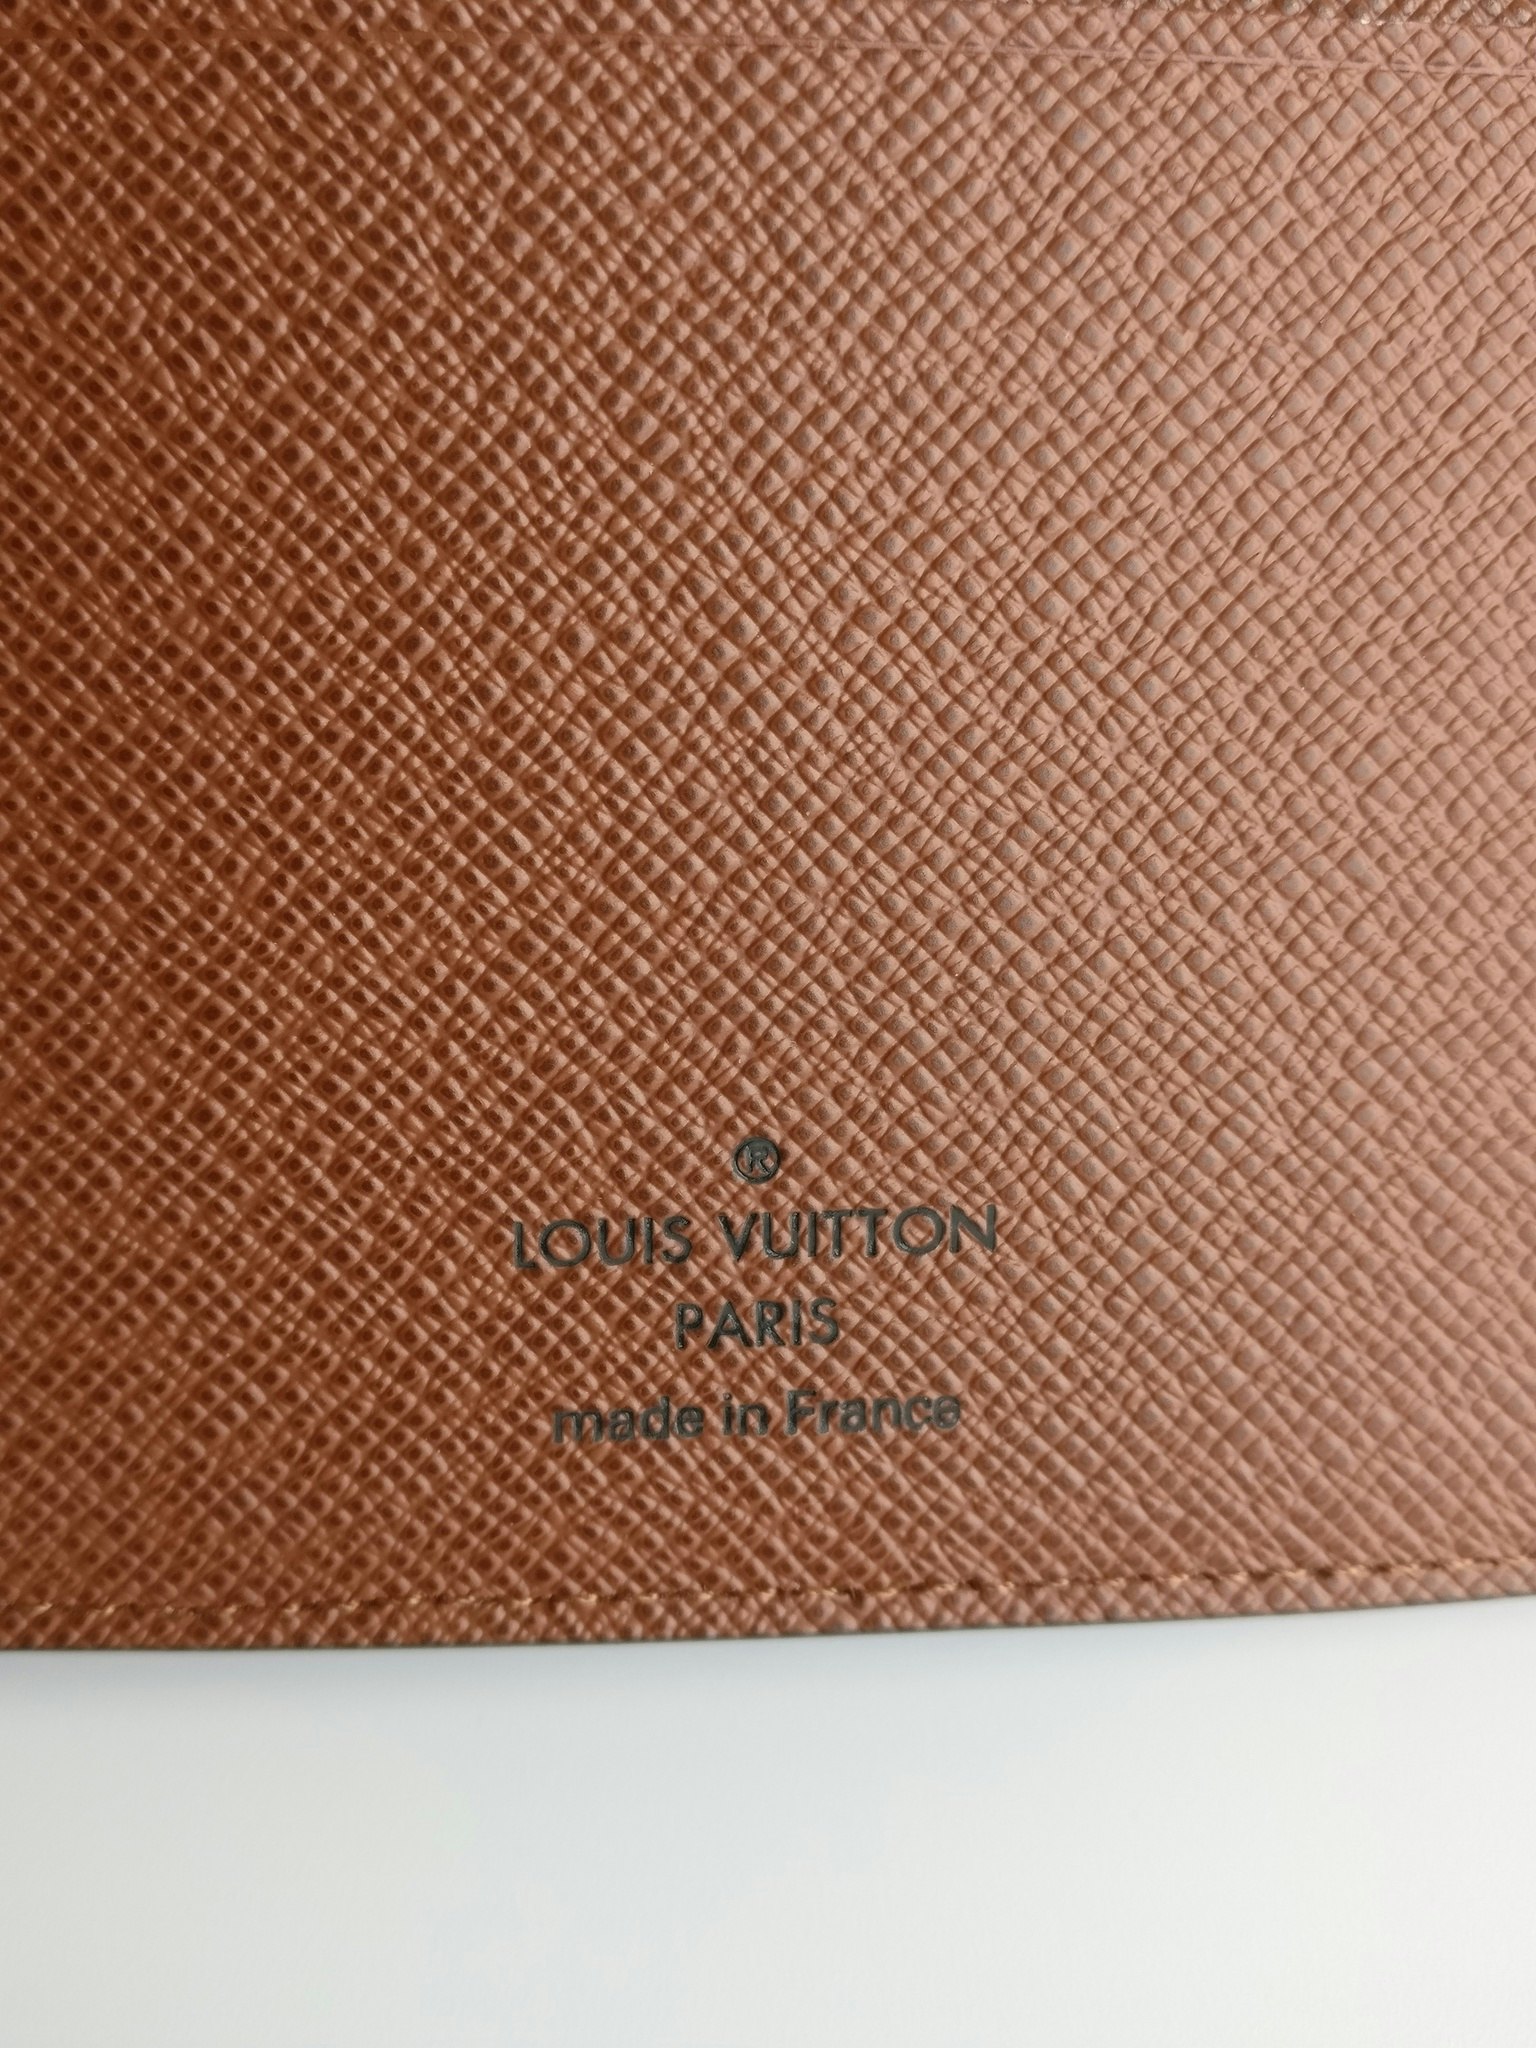 Louis Vuitton desk agenda Monogram 8902AN